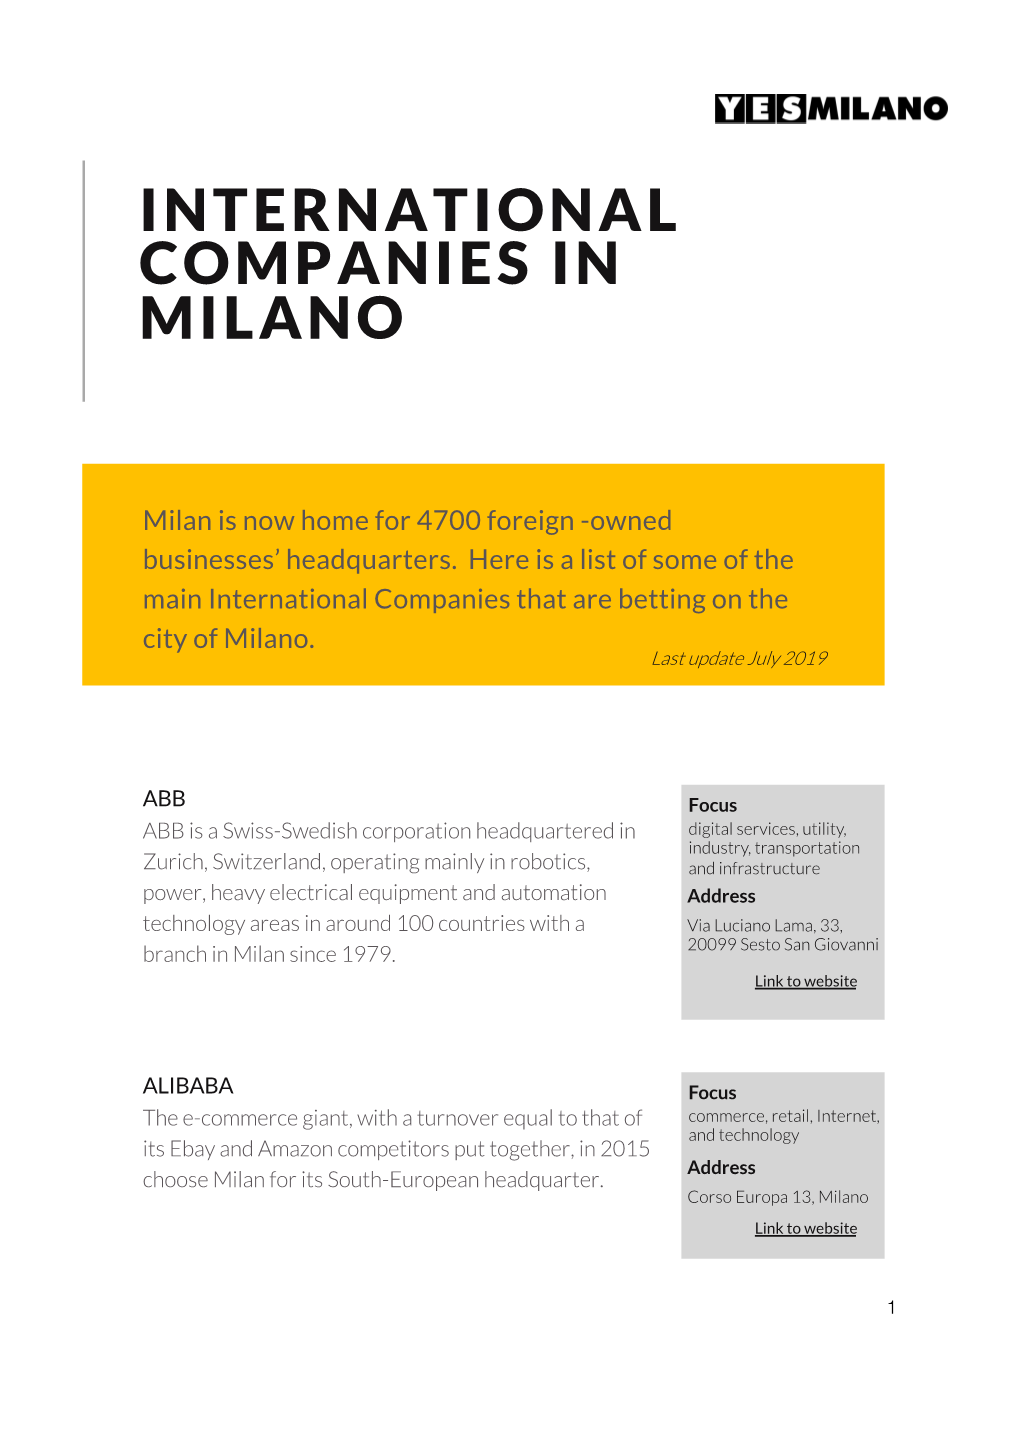 International Companies in Milano